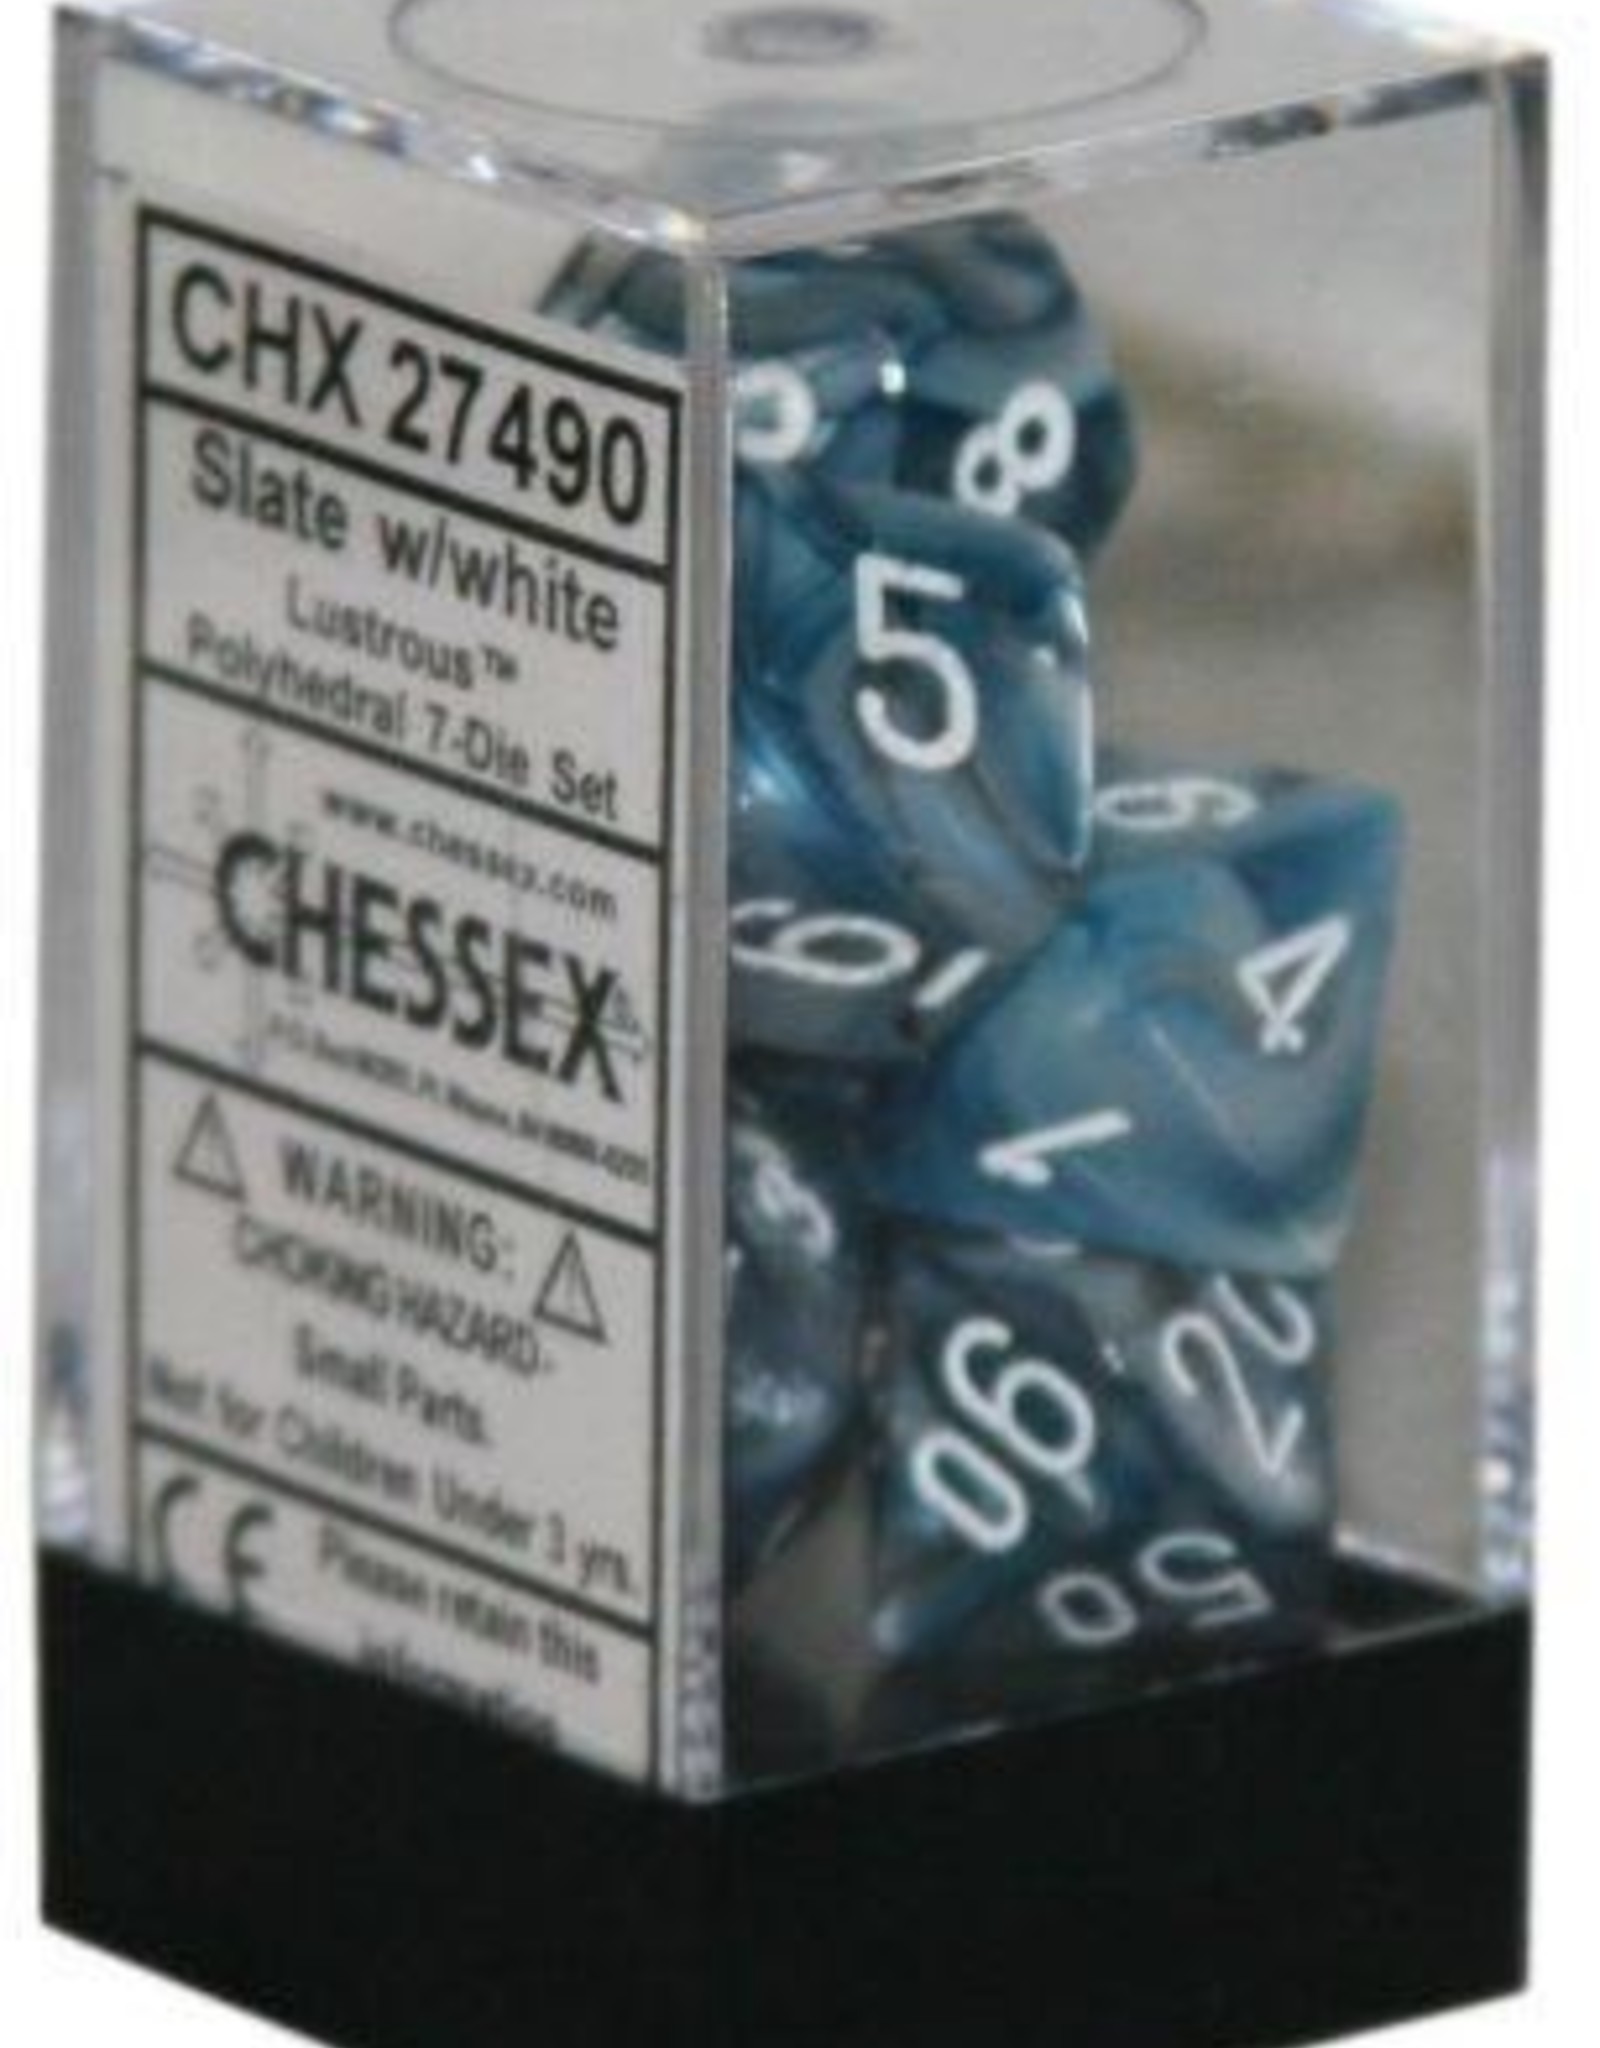 Chessex 7Ct Dice Set CHX27490 Lustrous Slate/White